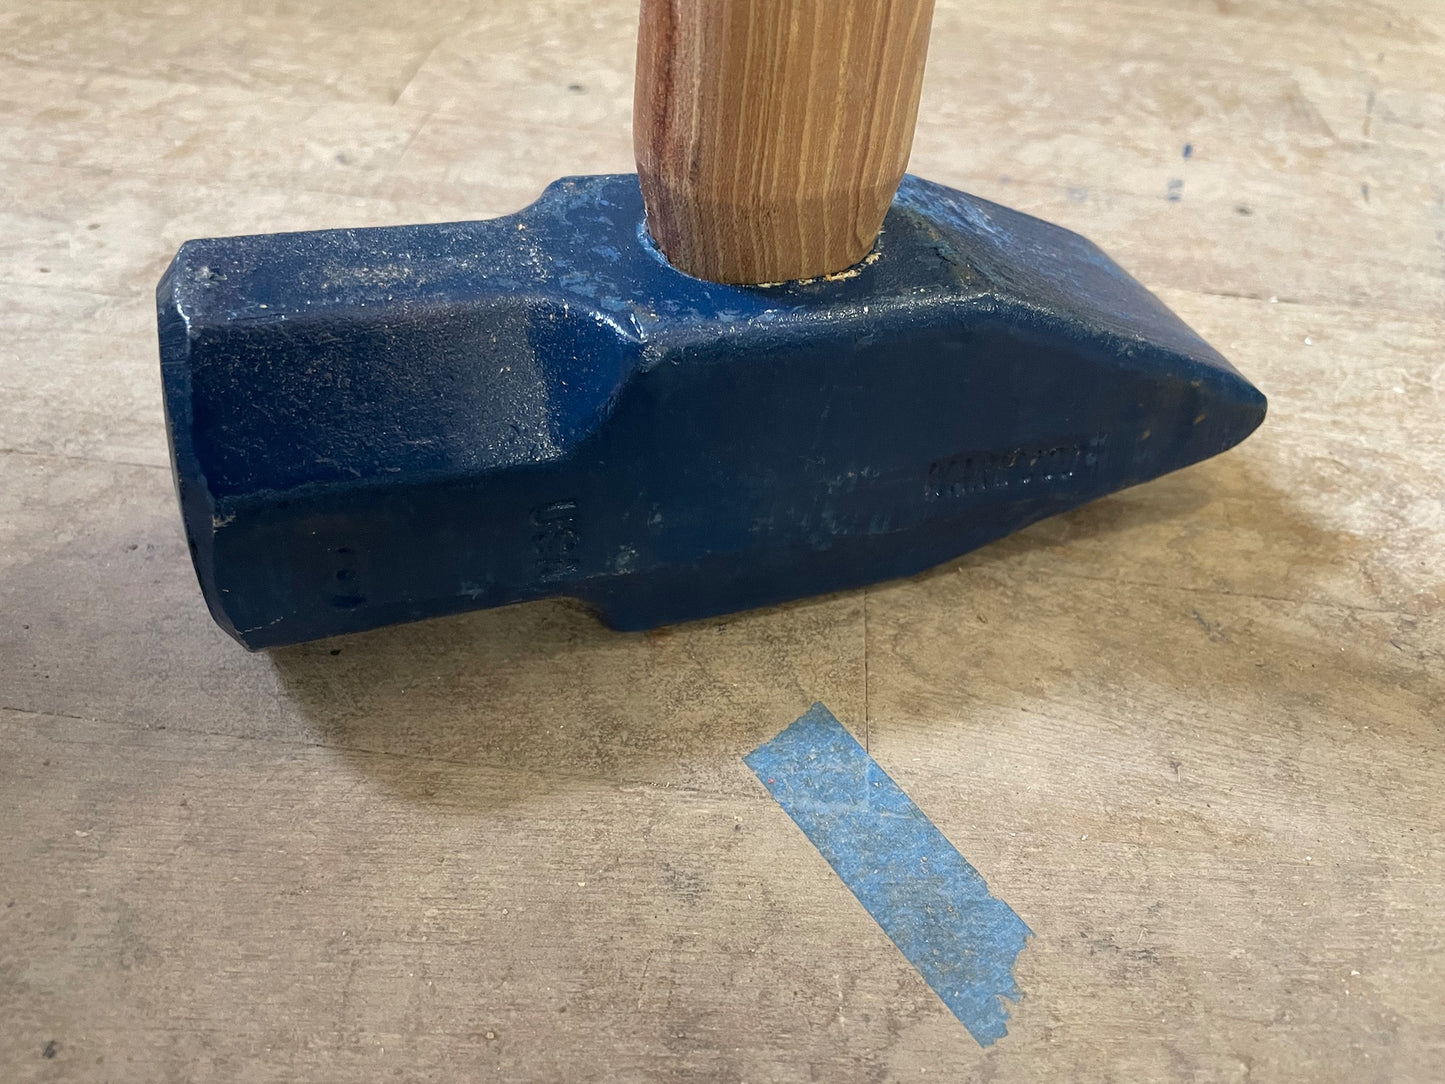 Warwood 8 LB Cross Pein Wood Handled Sledge Hammer